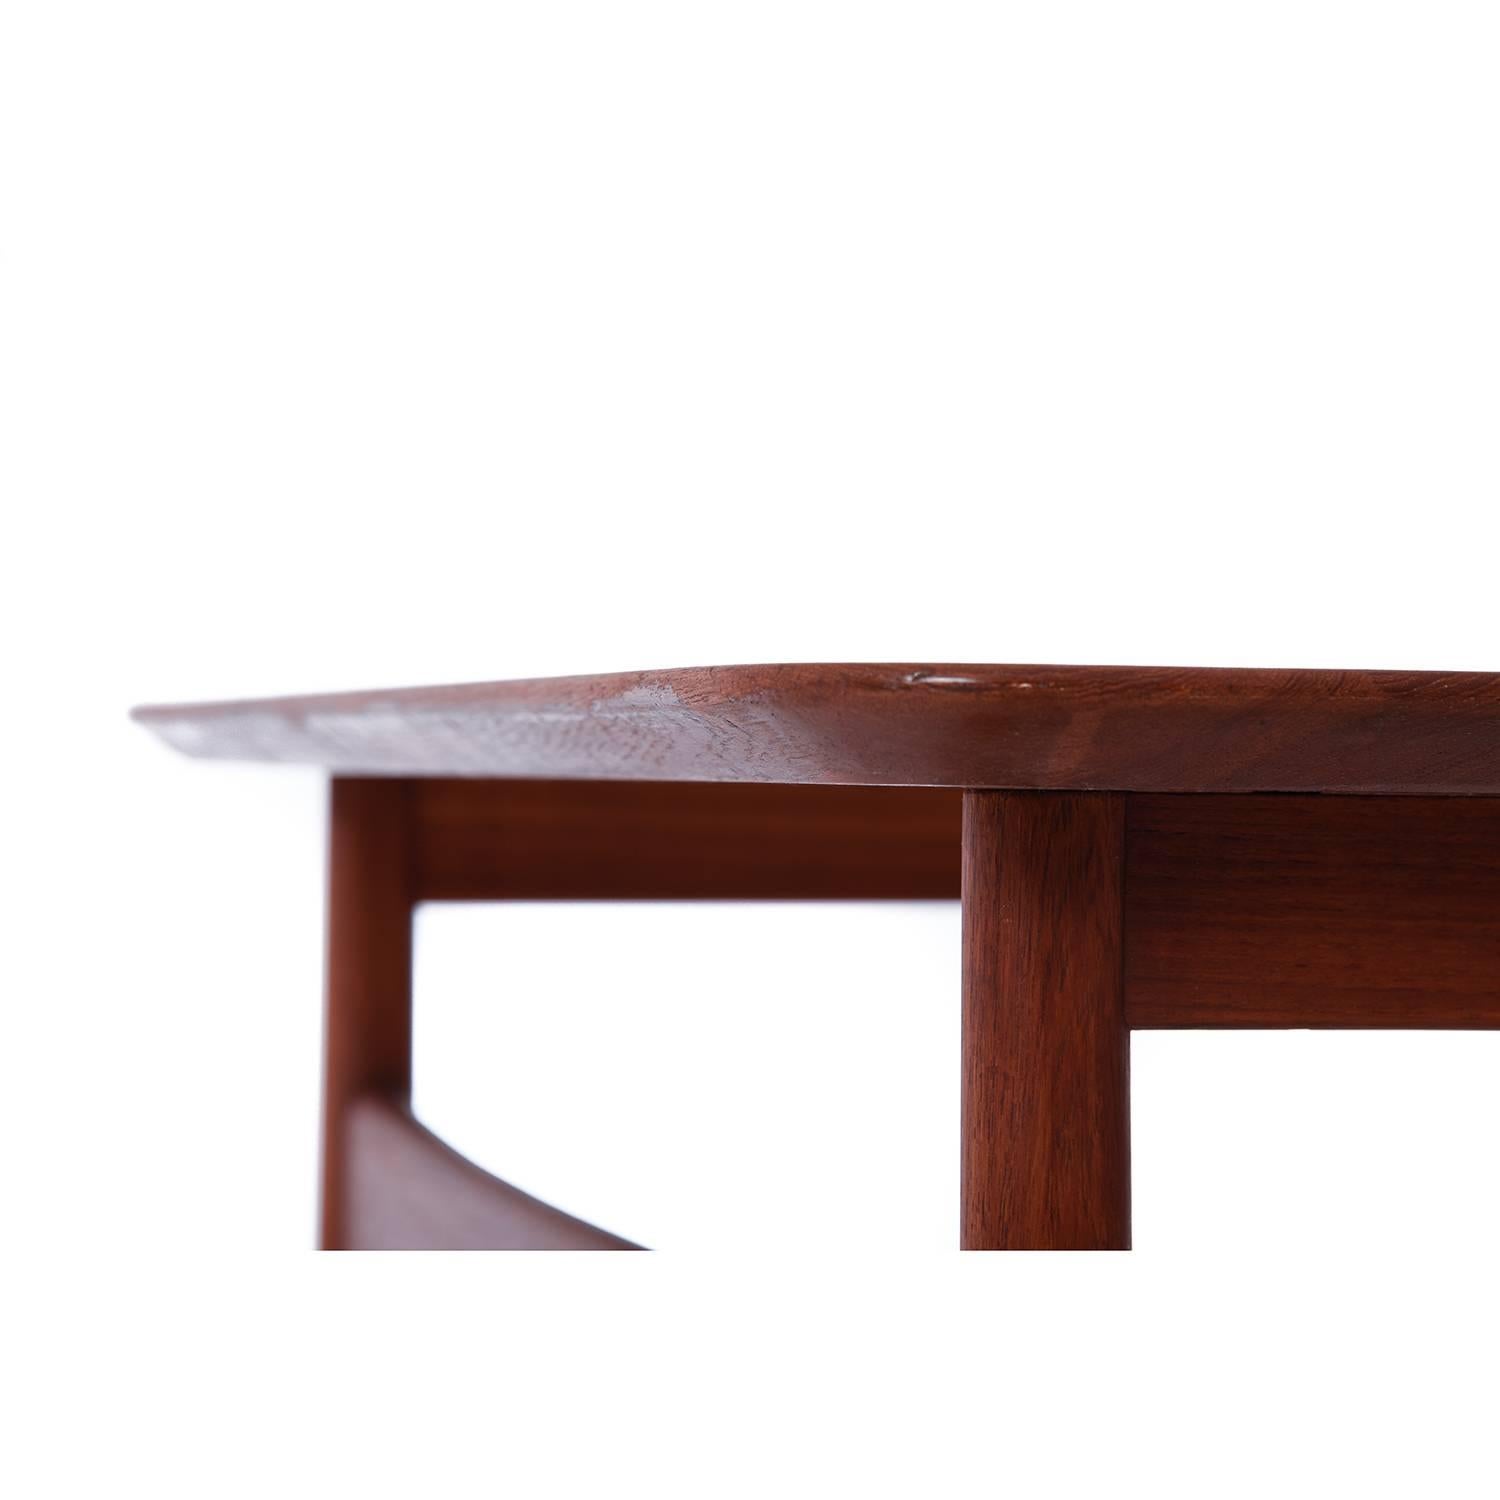 Scandinavian Modern Danish Modern Sleigh Based Occasional Table in Teak